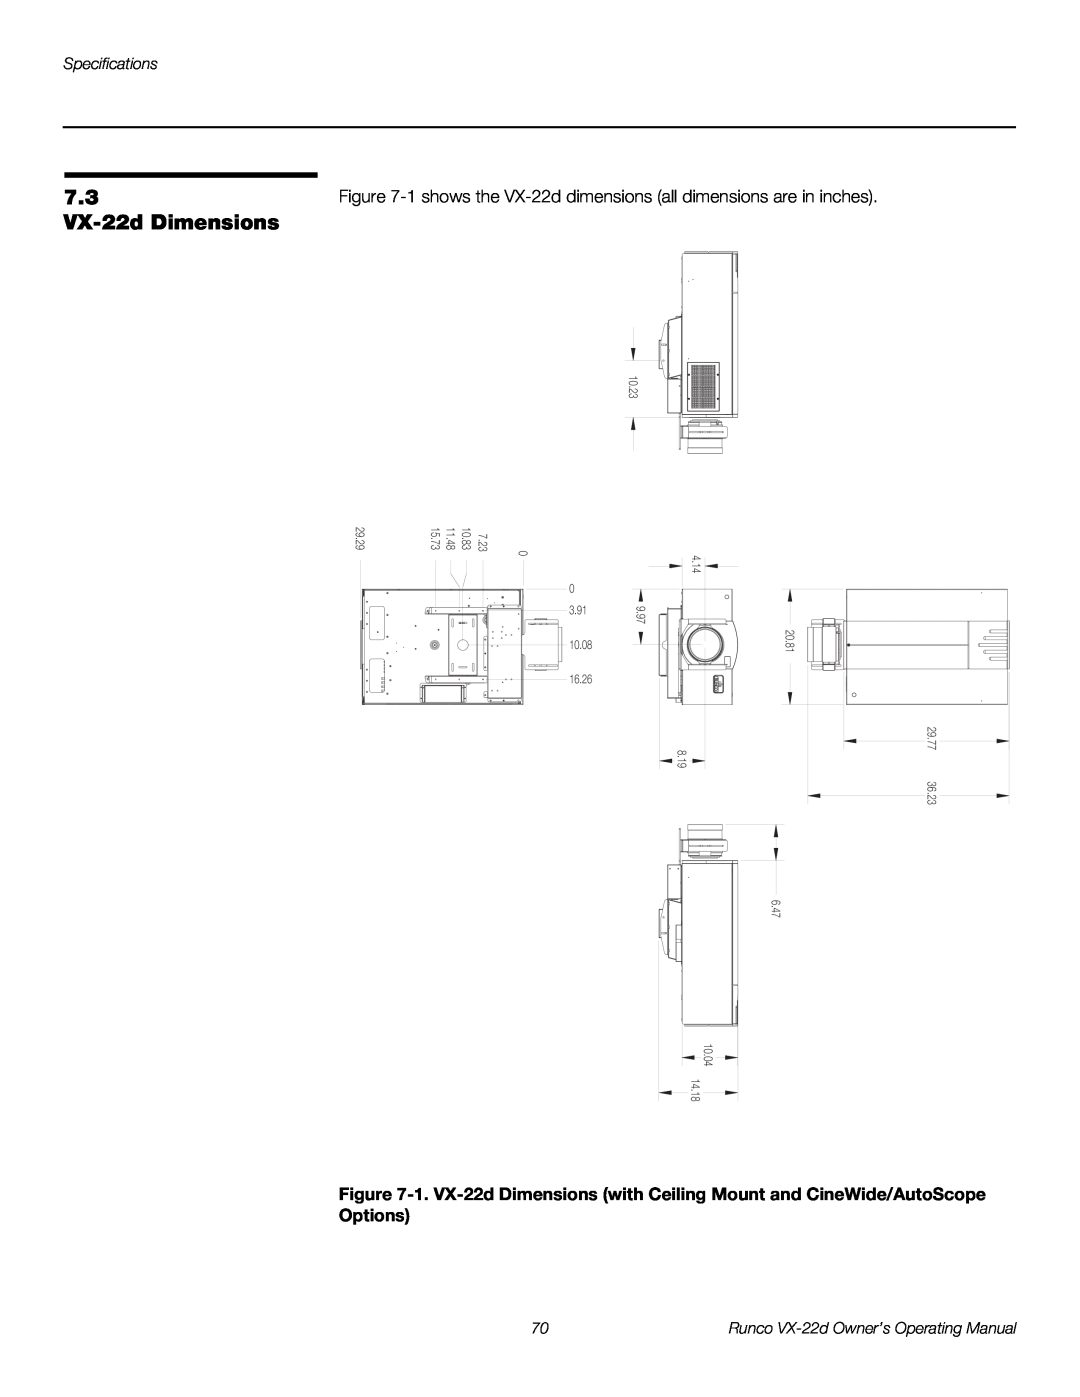 Runco VX-22D 7.3 VX-22d Dimensions, Specifications, 3.91 10.08 16.26, 10.23, 29.29, 7.23 10.83 11.48, 4.14 9.97, 8.19 